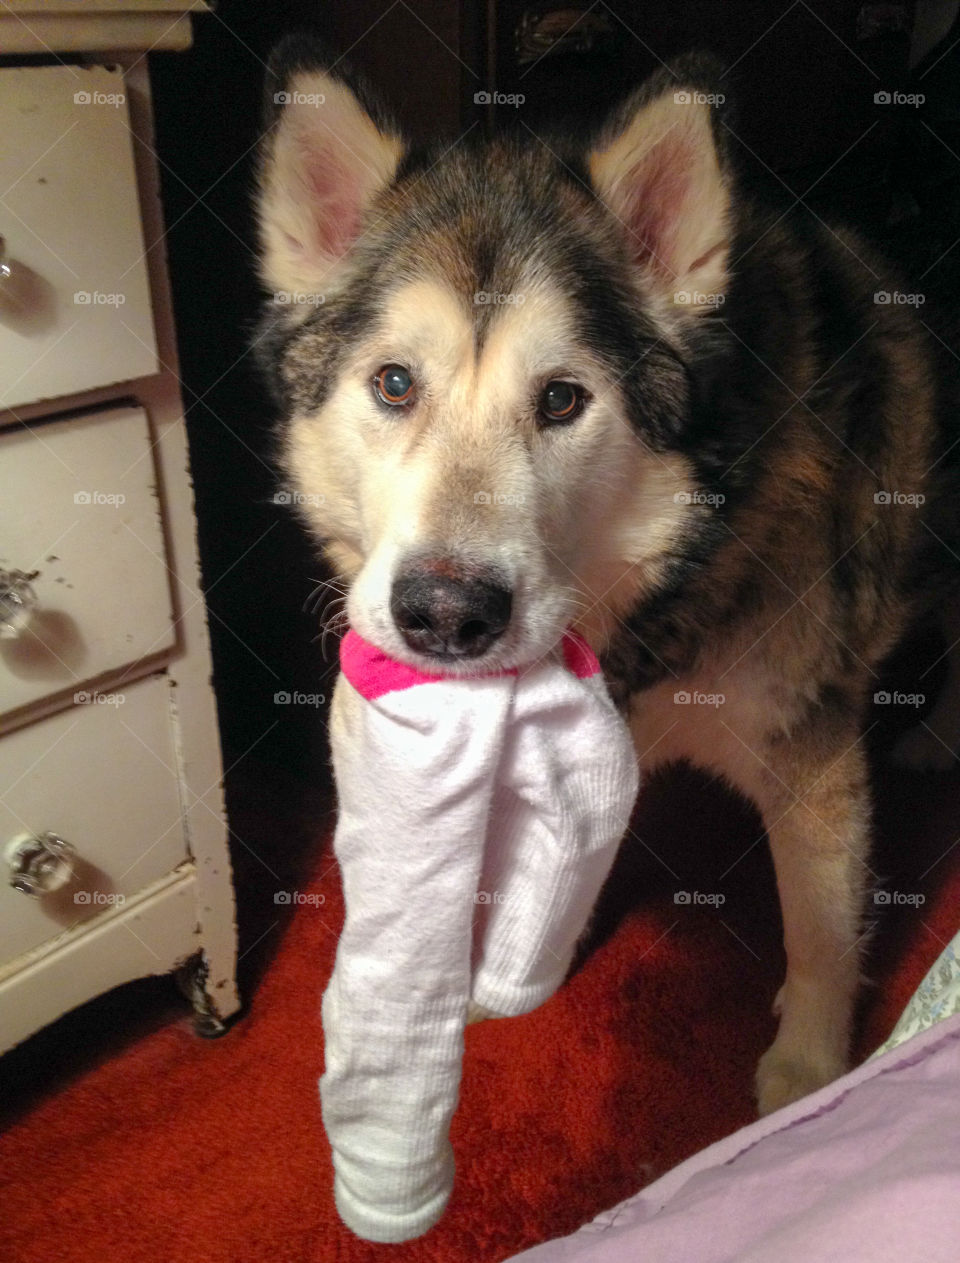 Dog steals socks 